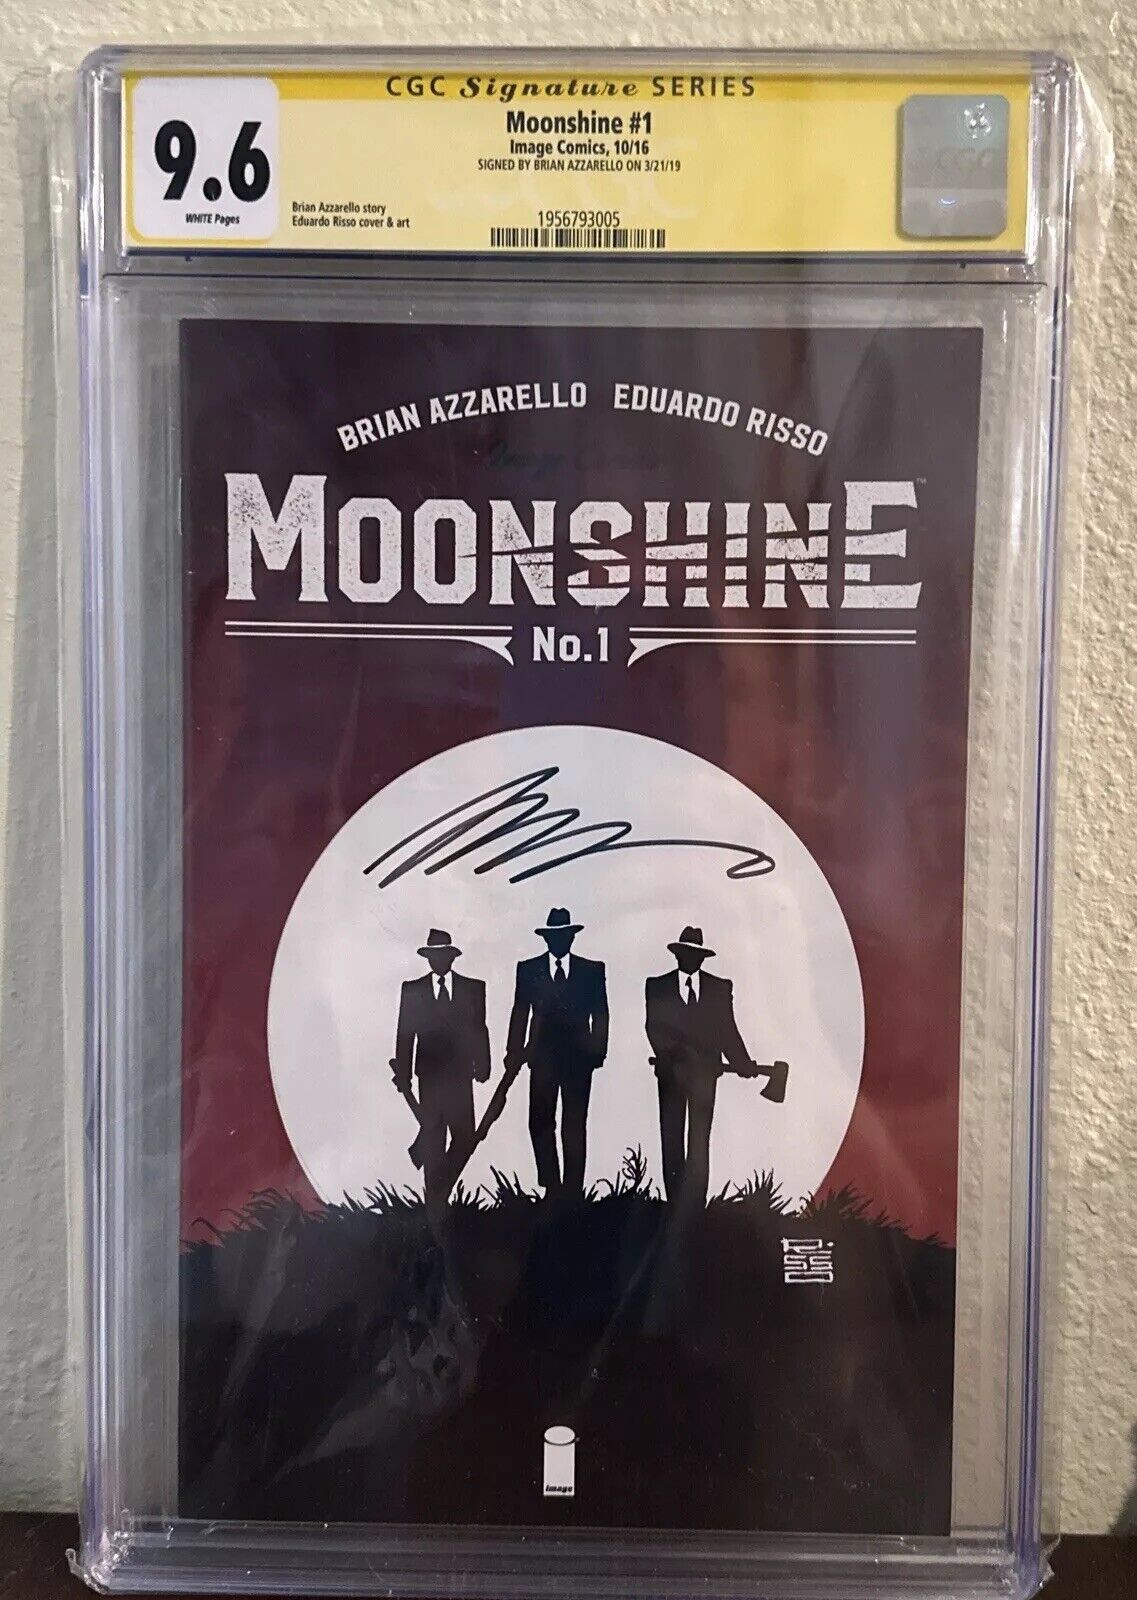 Moonshine #1 CGC 9.6 SS SIGNED BY BRIAN AZZARELLO IMAGE COMICS